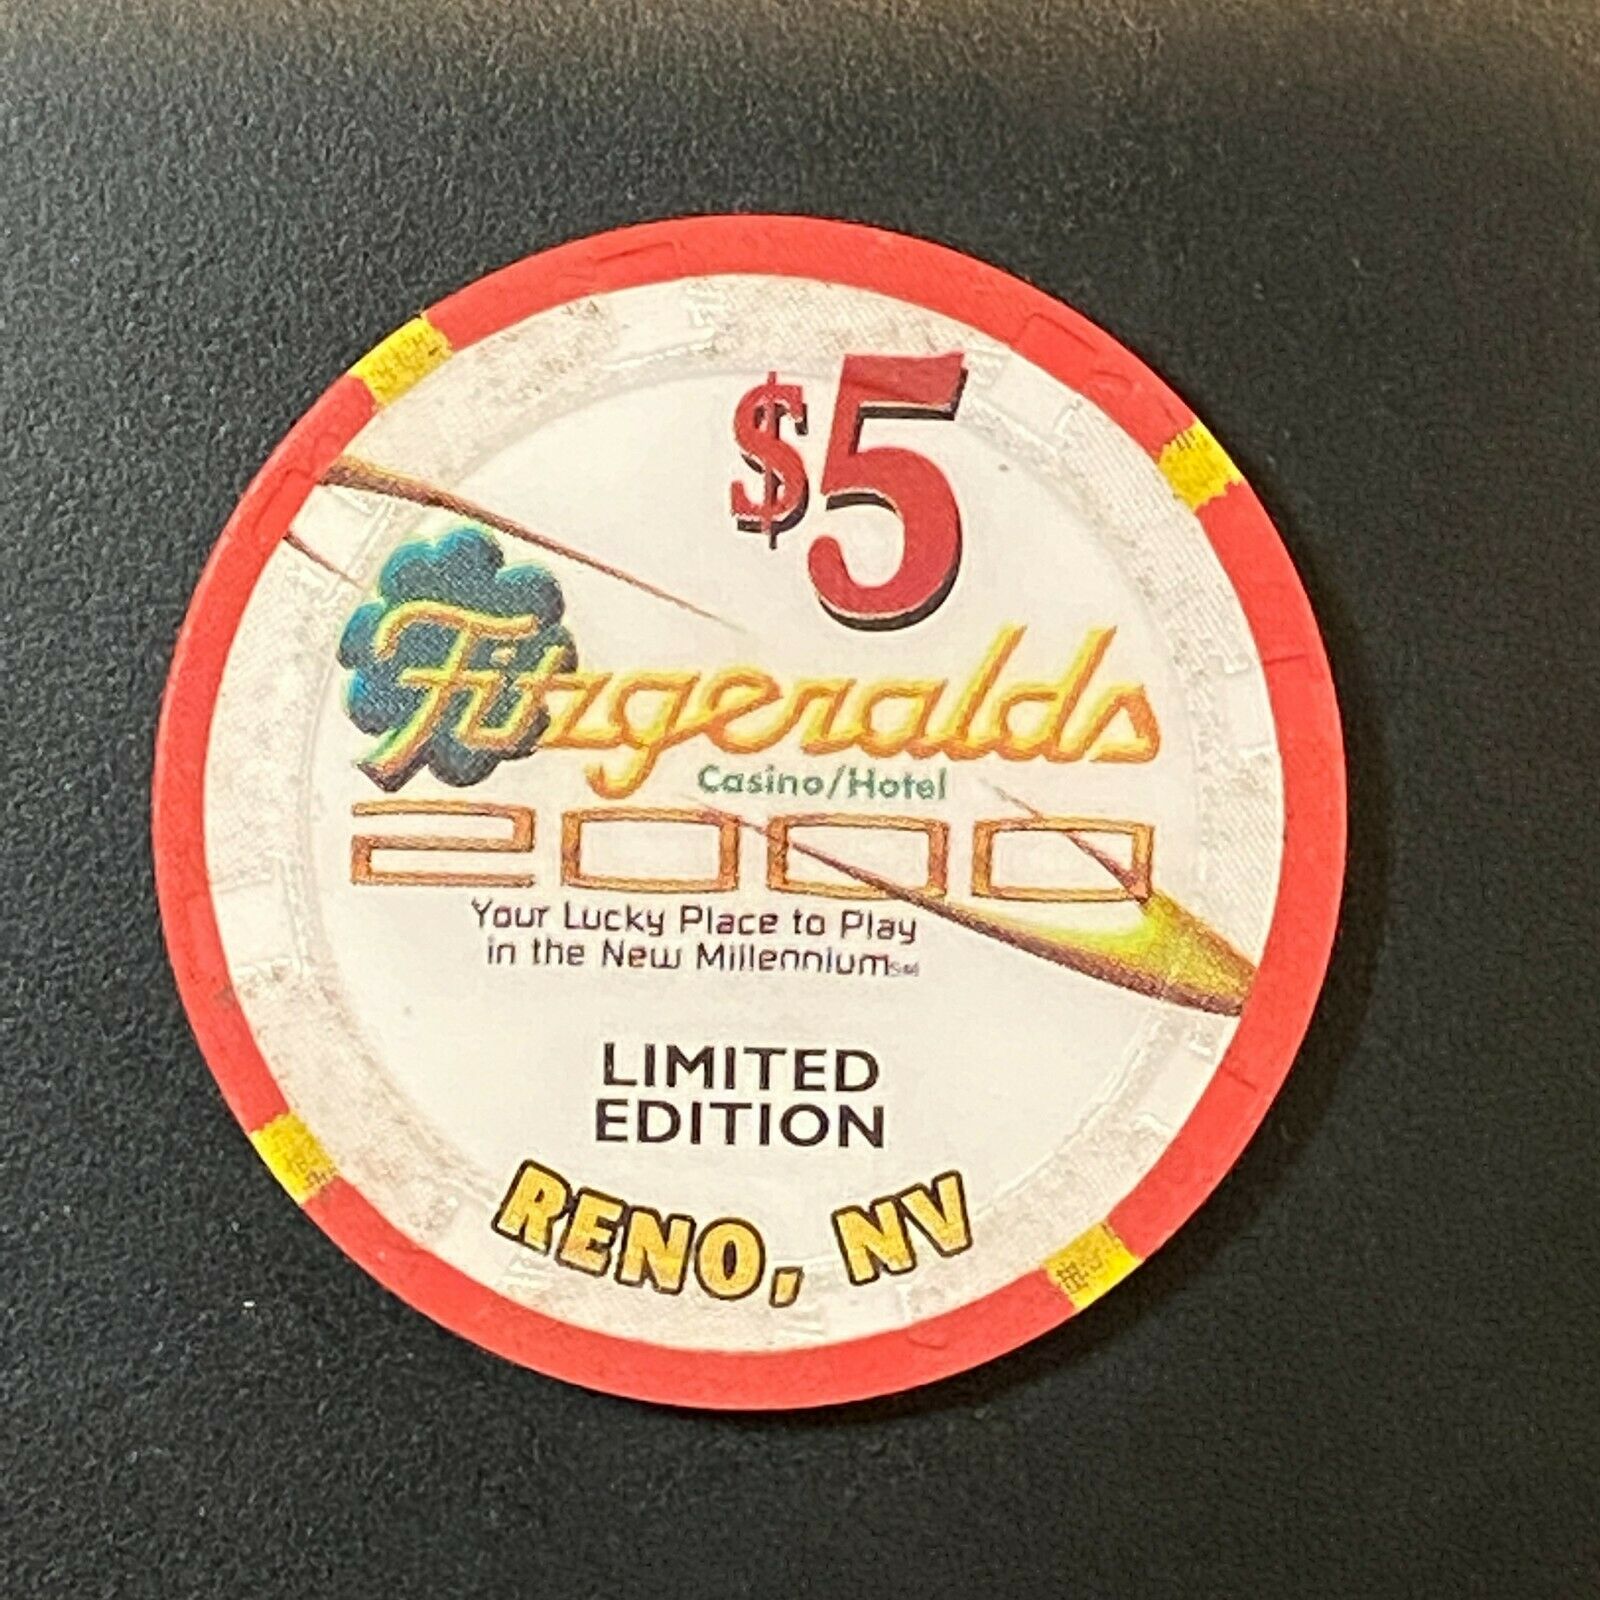 Fitzgeralds Casino $5 Casino Chip "millennium" Limited Edition, Reno, Nv